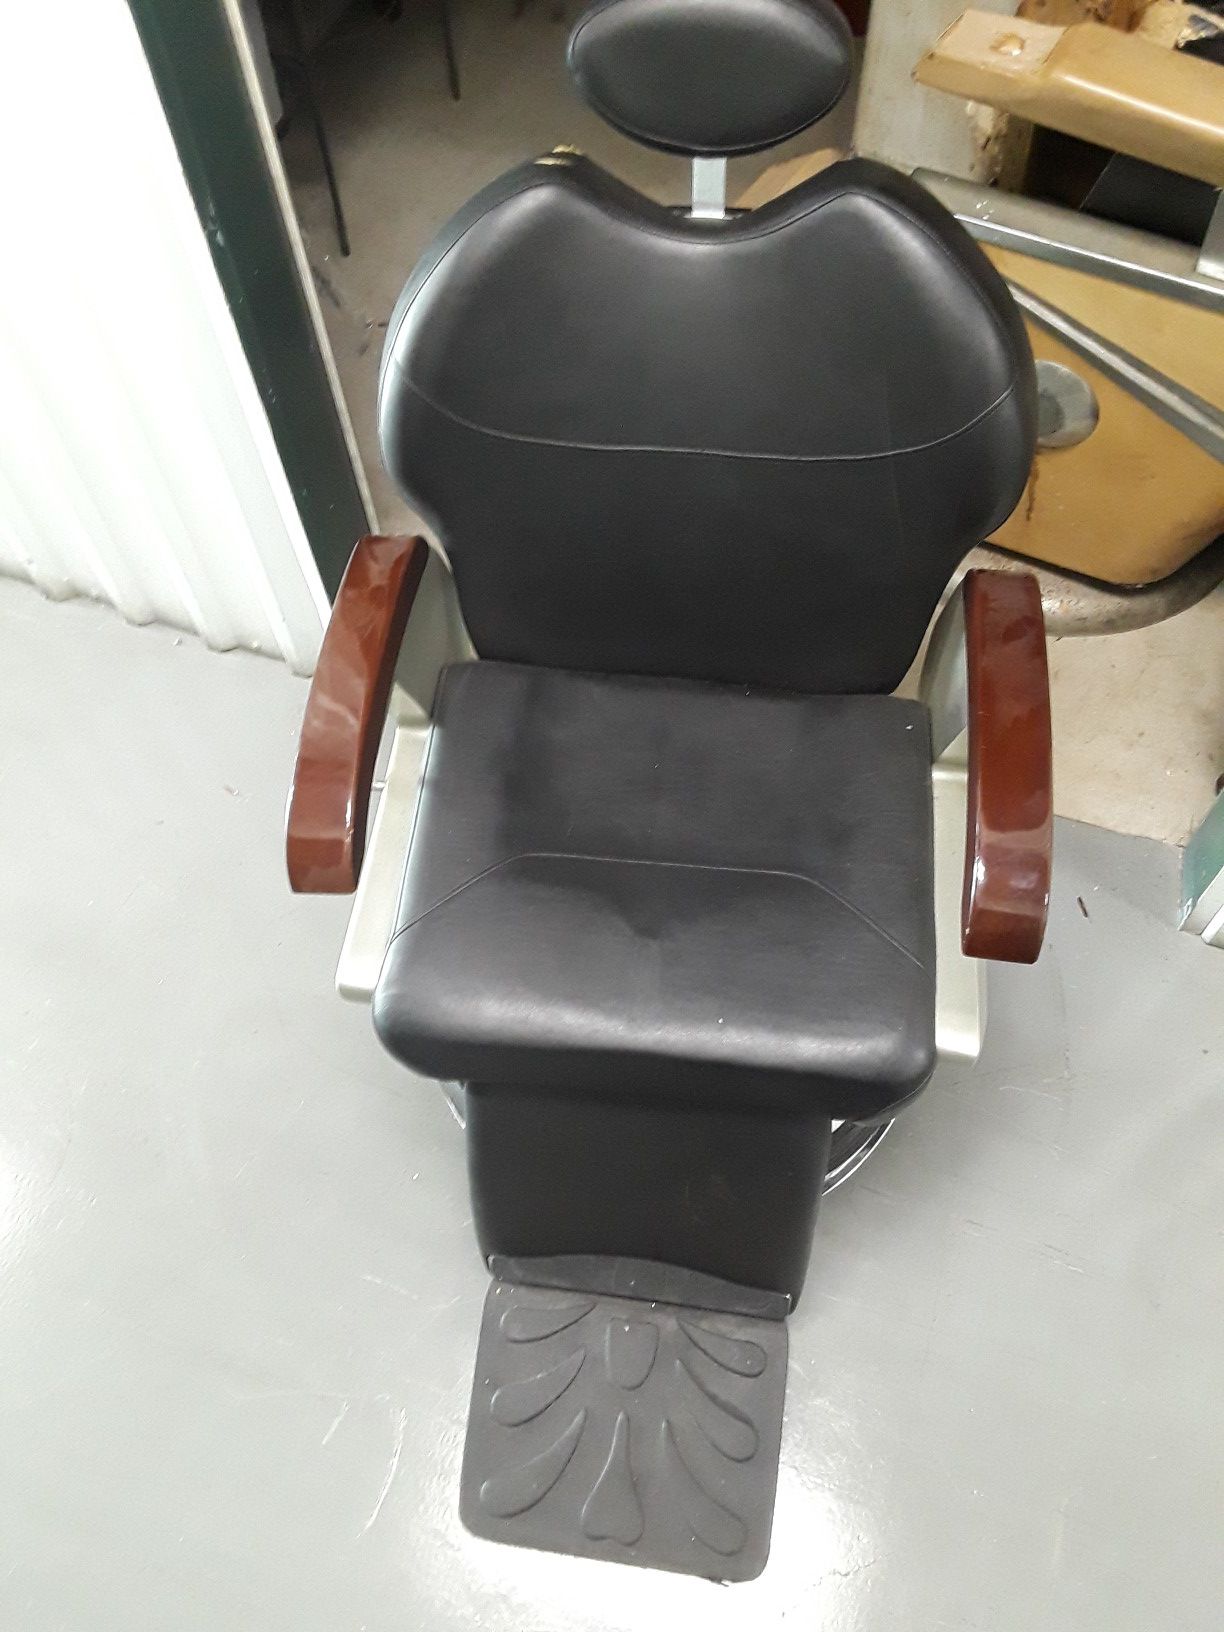 Real nice barber chairs